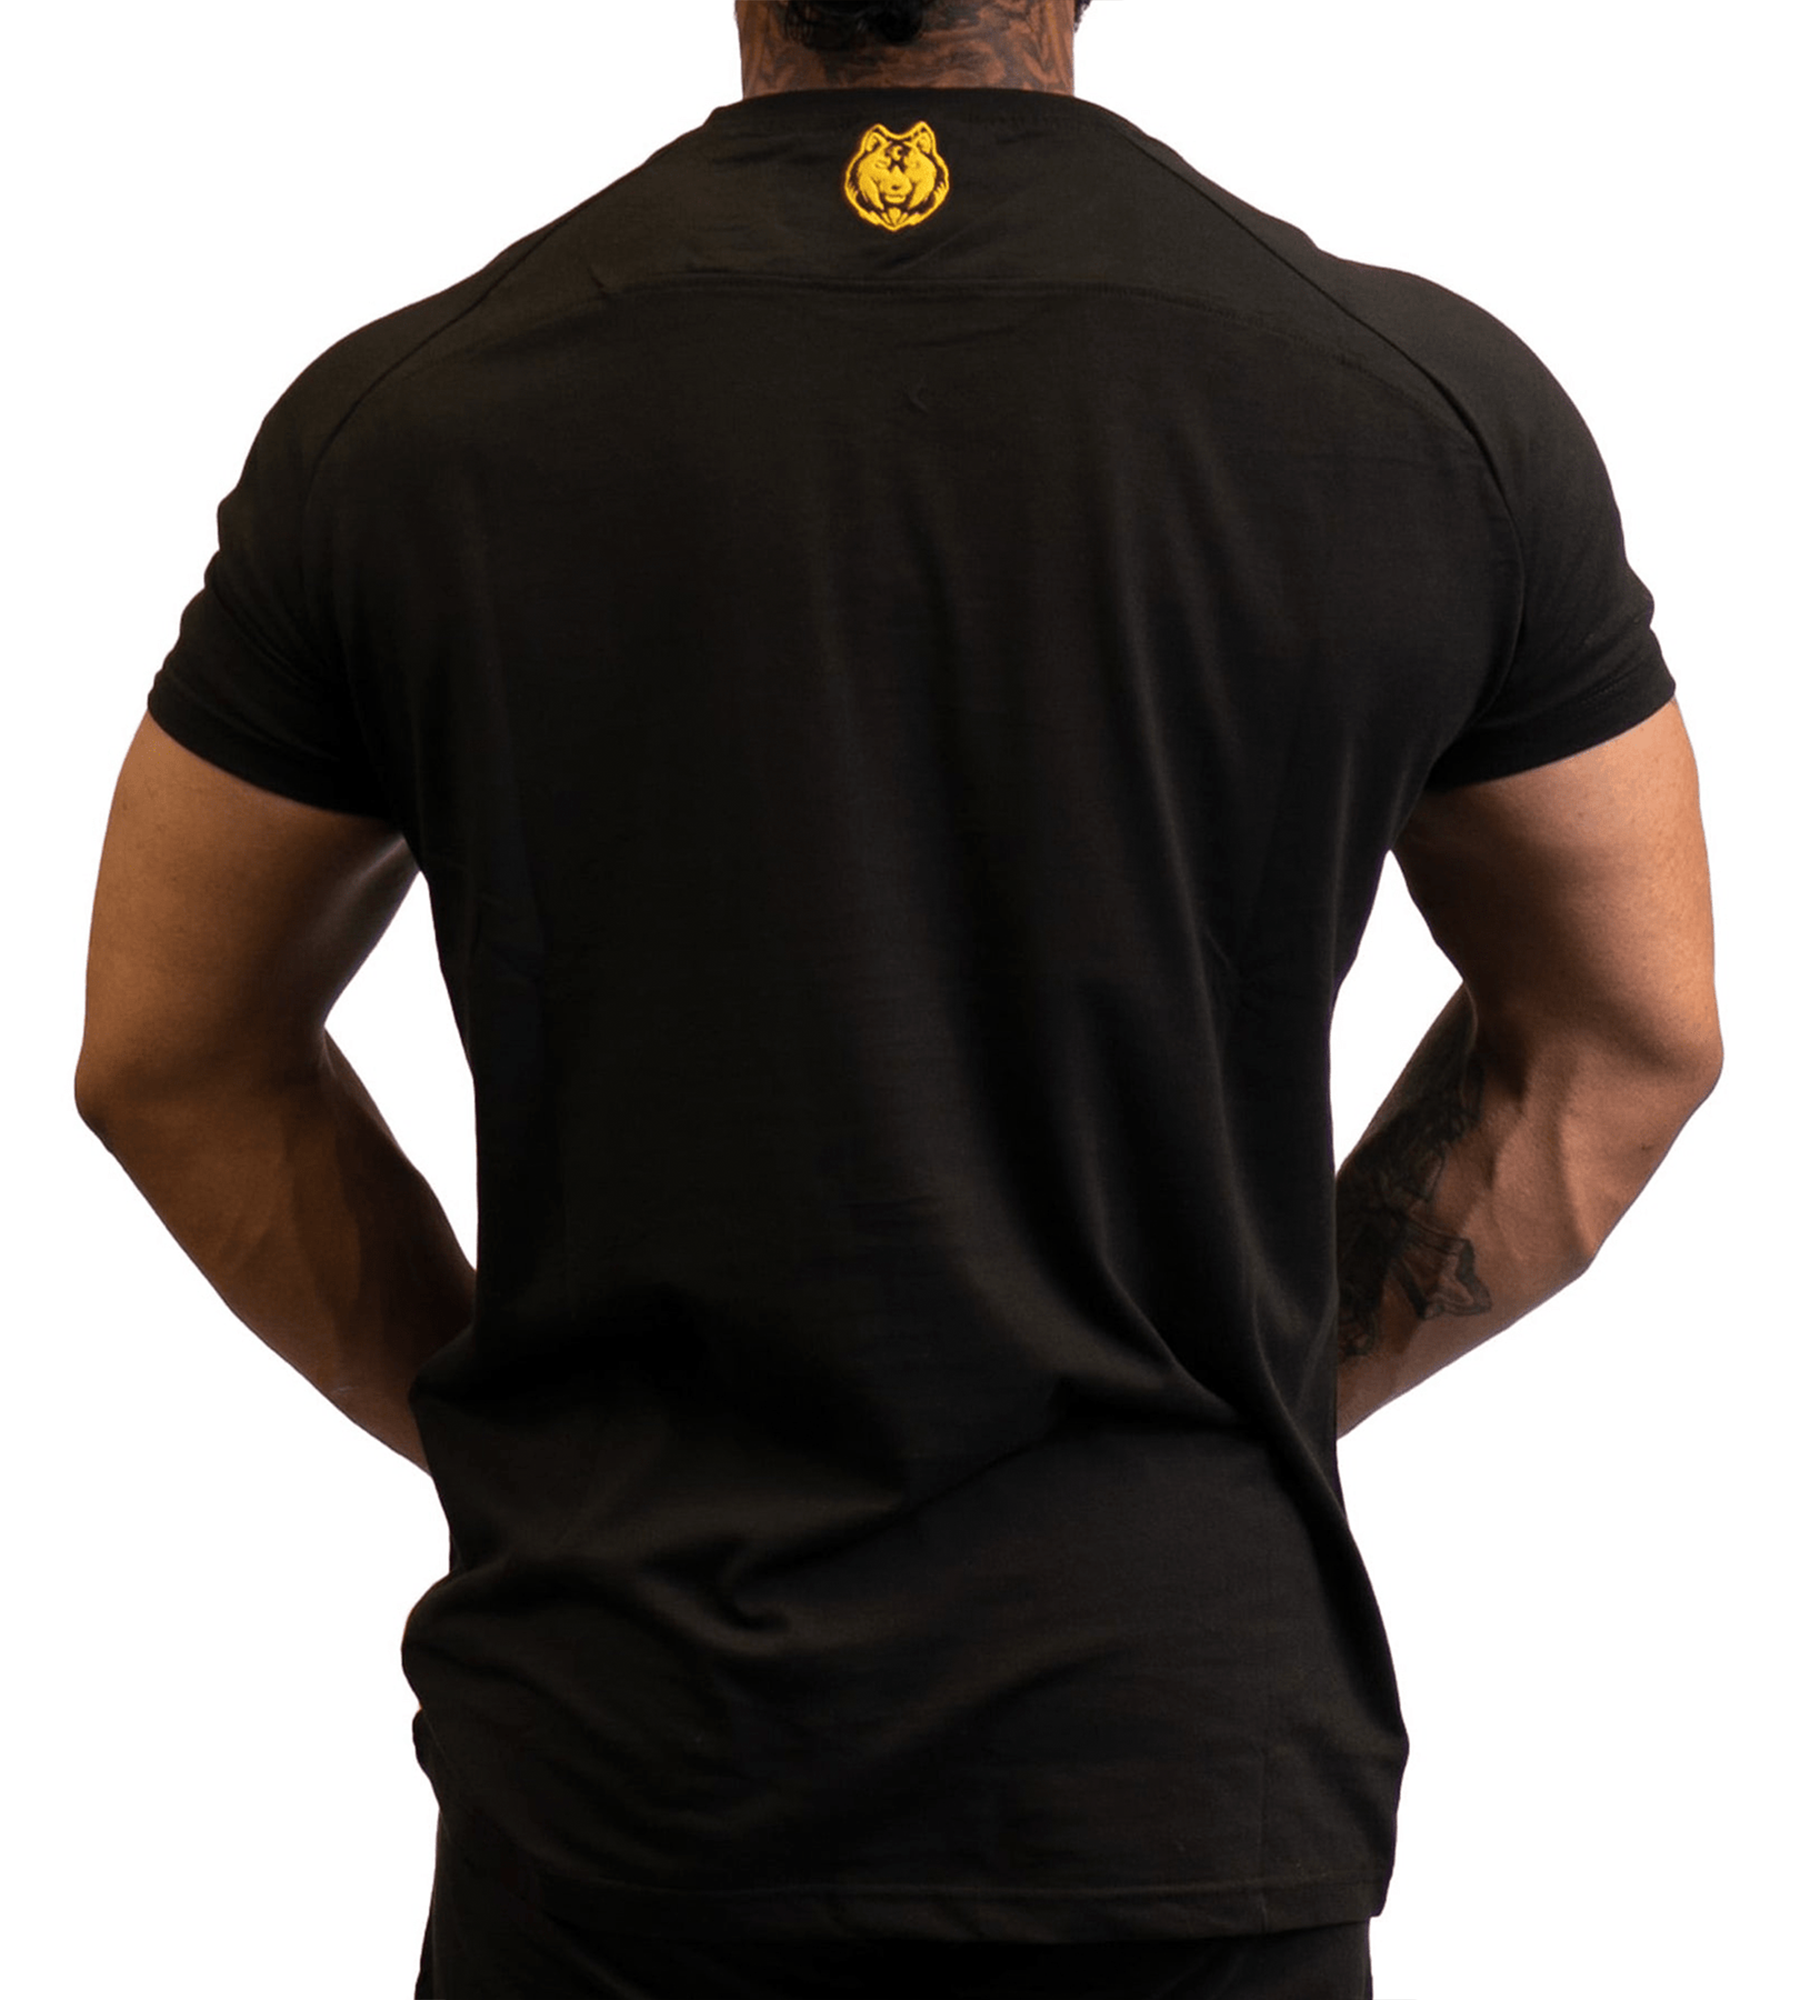 FitnessFox Men's Black T-Shirts